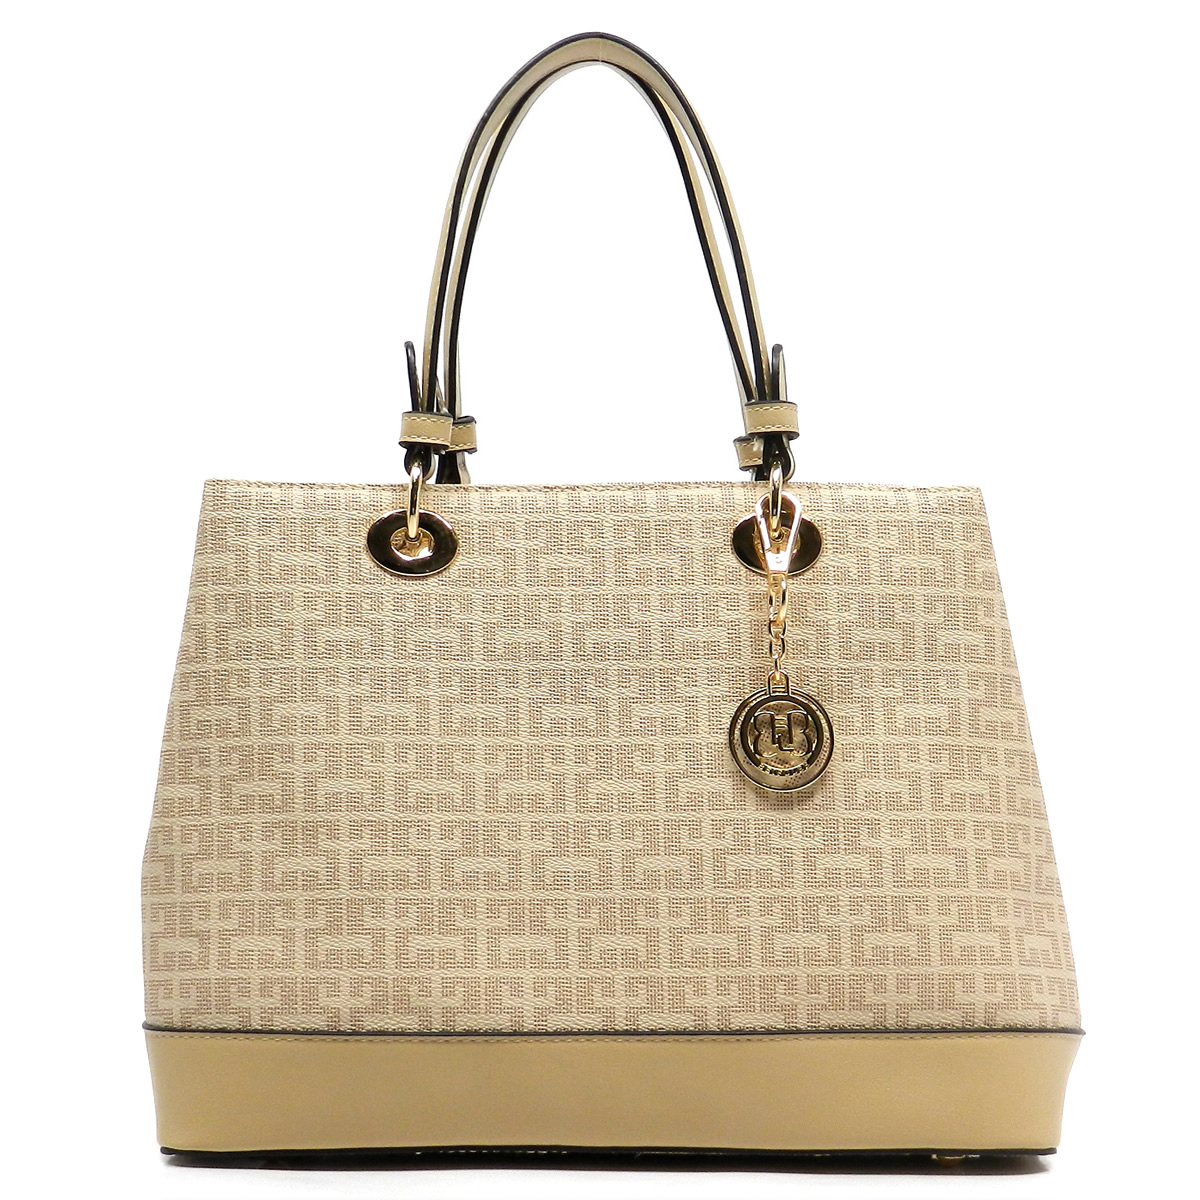 Signature Handbag - G Style & Signature Handbags - Onsale Handbag